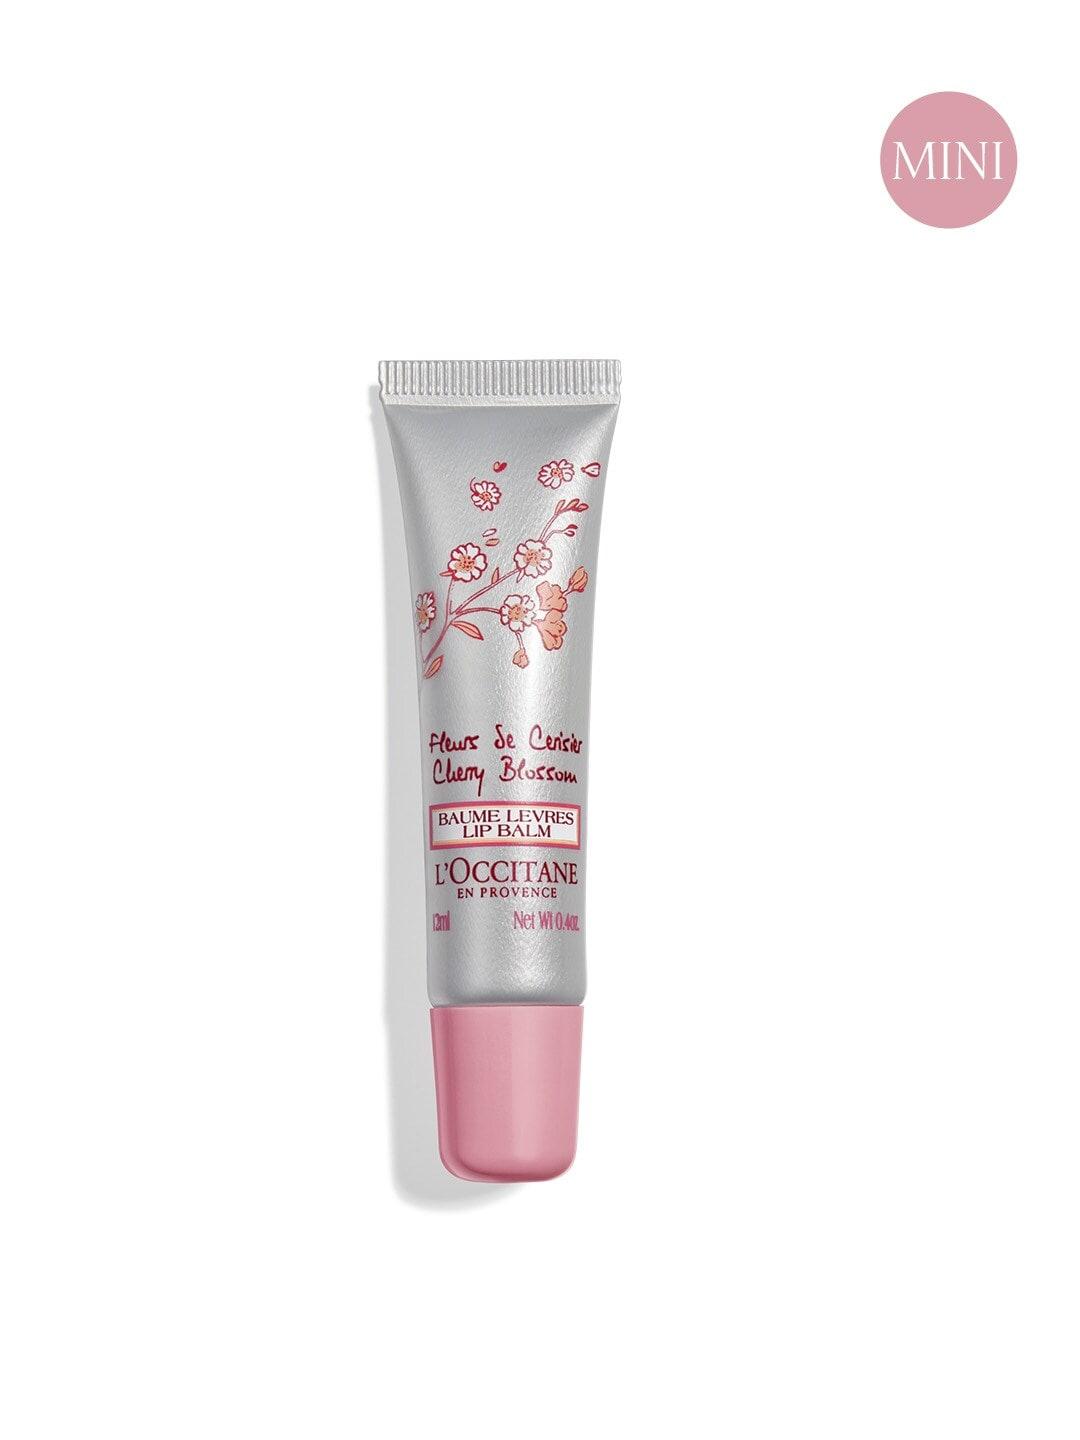 LOccitane en Provence Cherry Blossom Lip Balm - 12ml